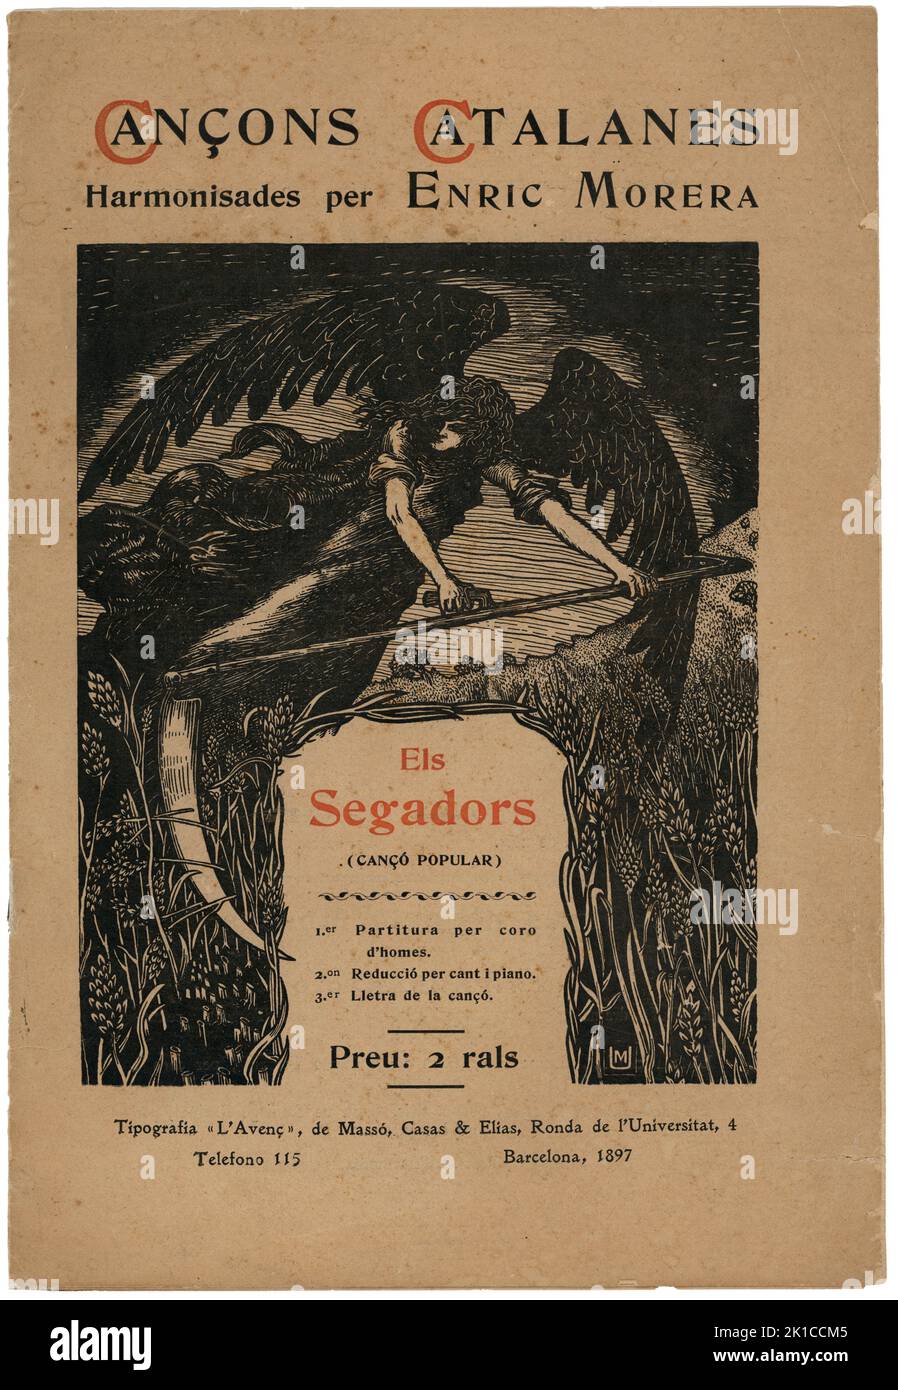 Partitura Musical del himno catalán Els Segadors. Barcelona, año 1897. Stockfoto